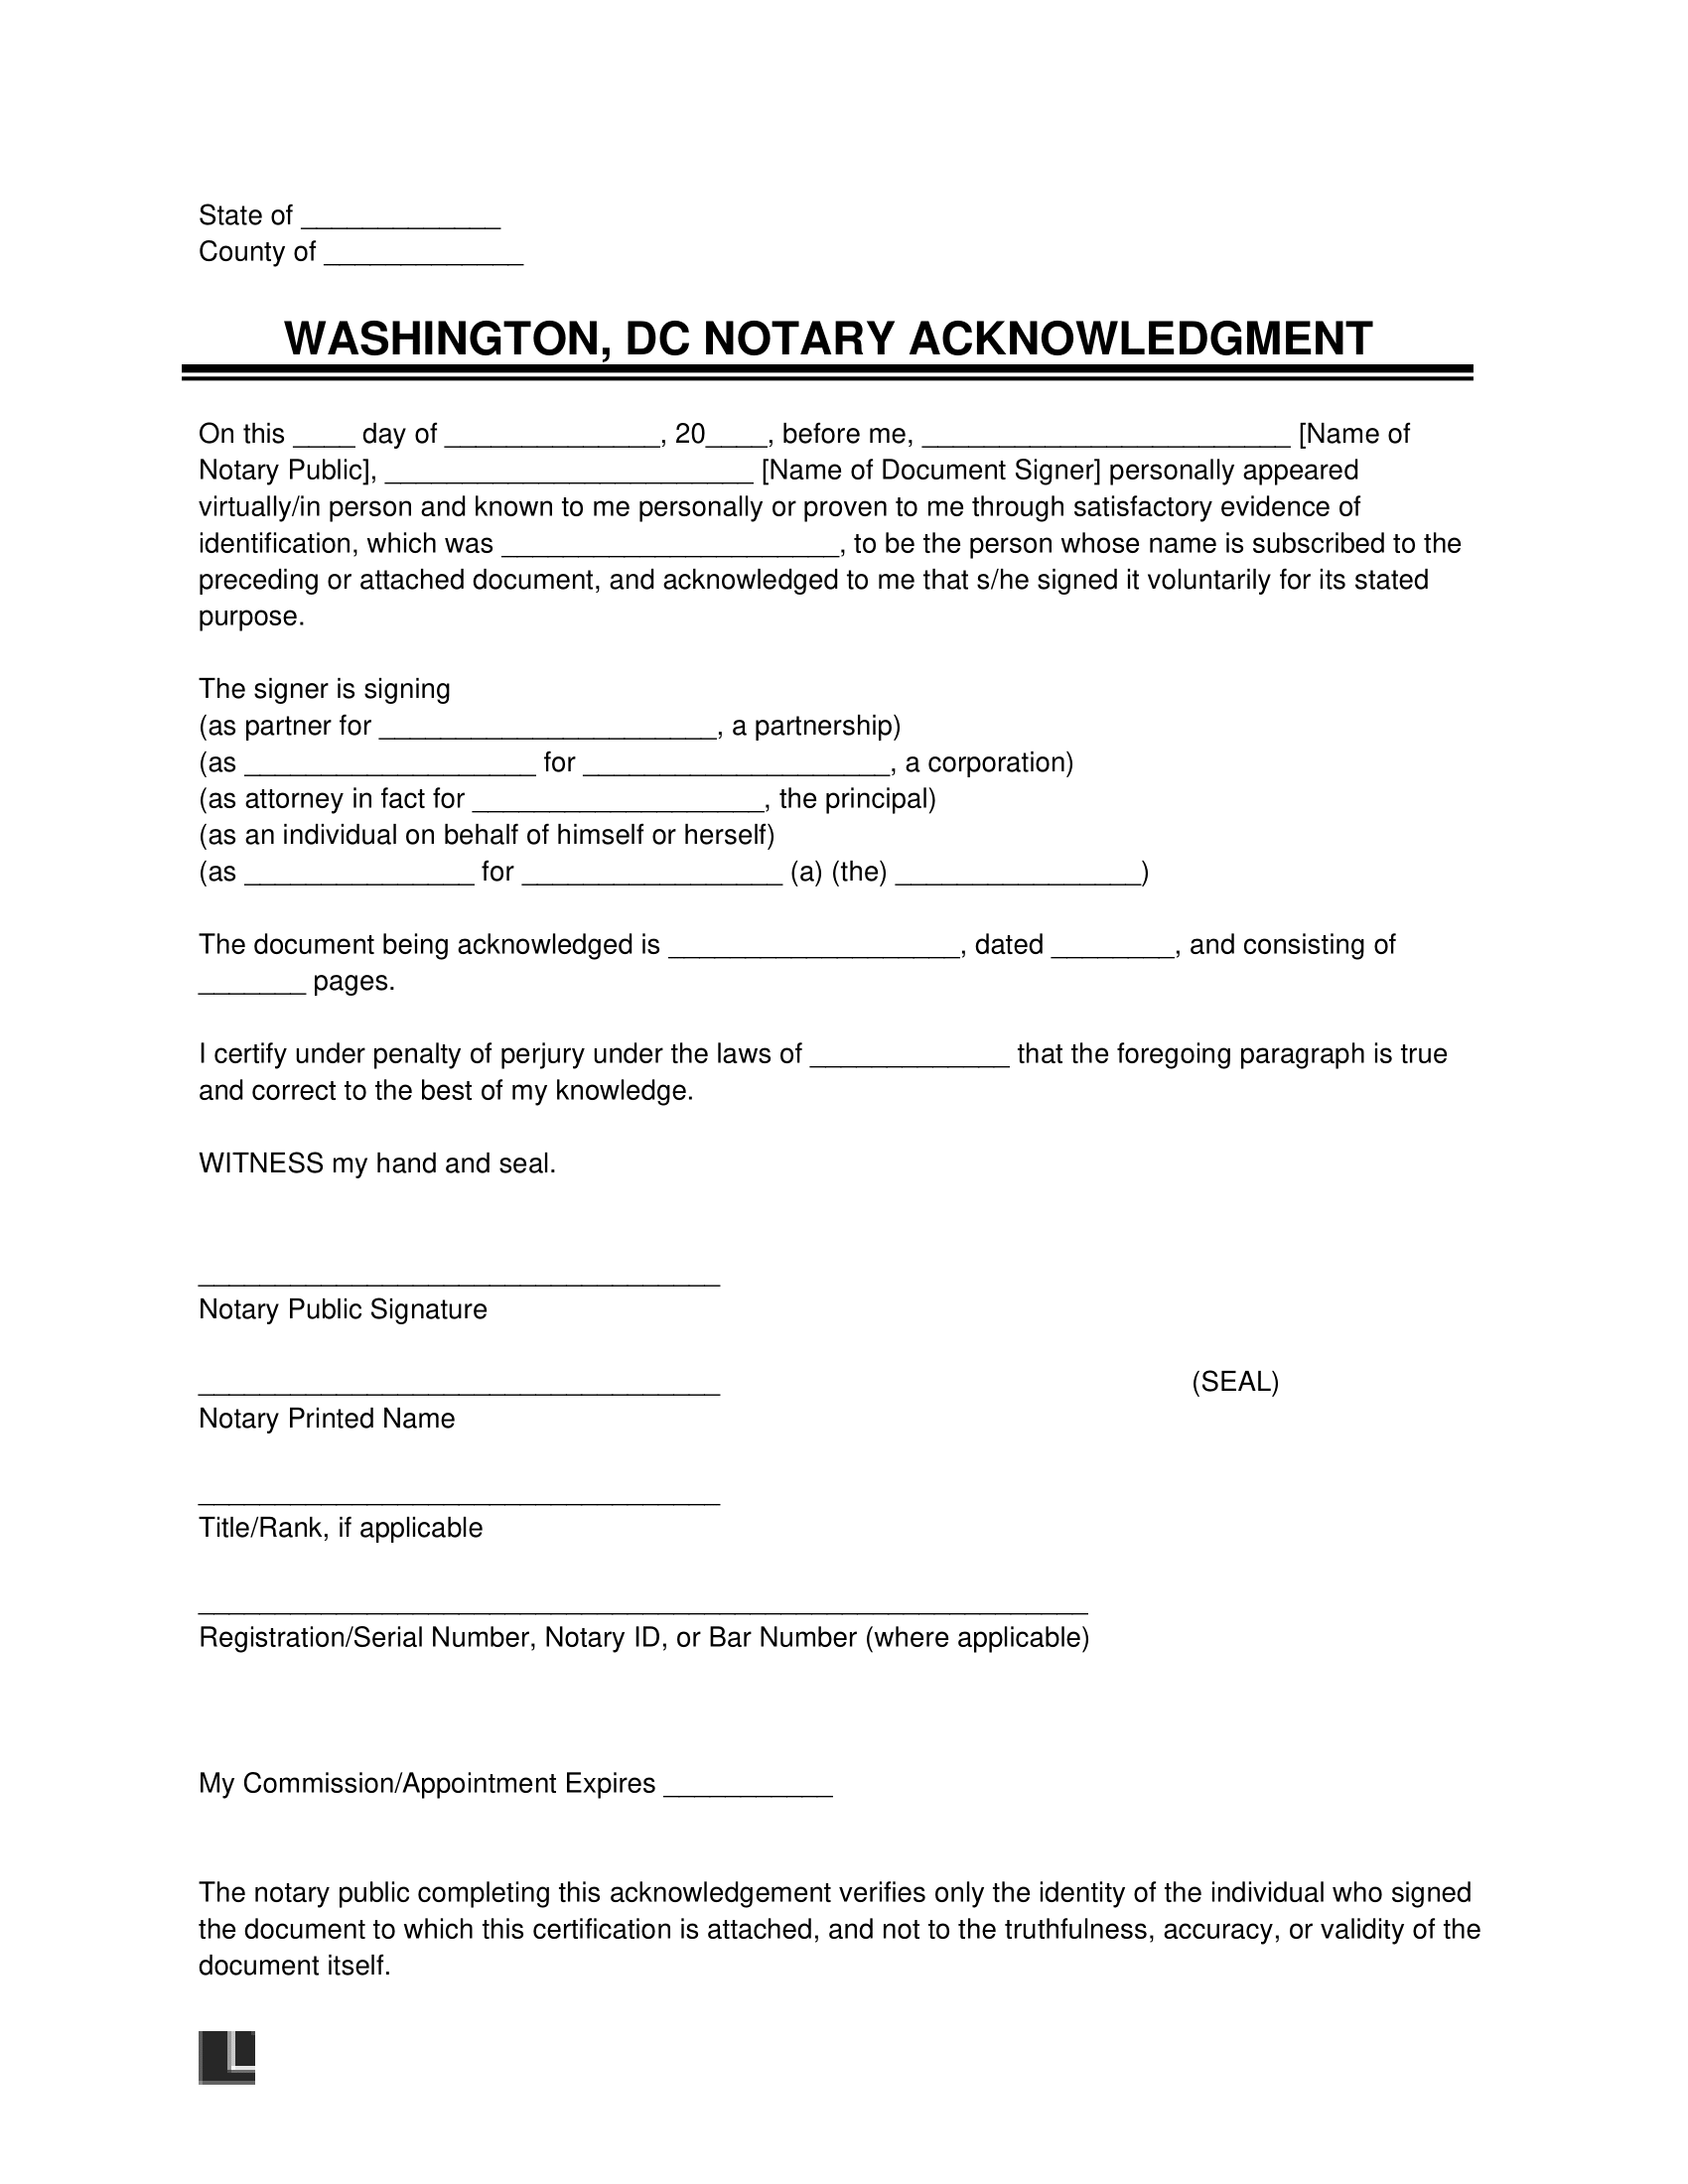 Washington, DC Notary Acknowledgment Form